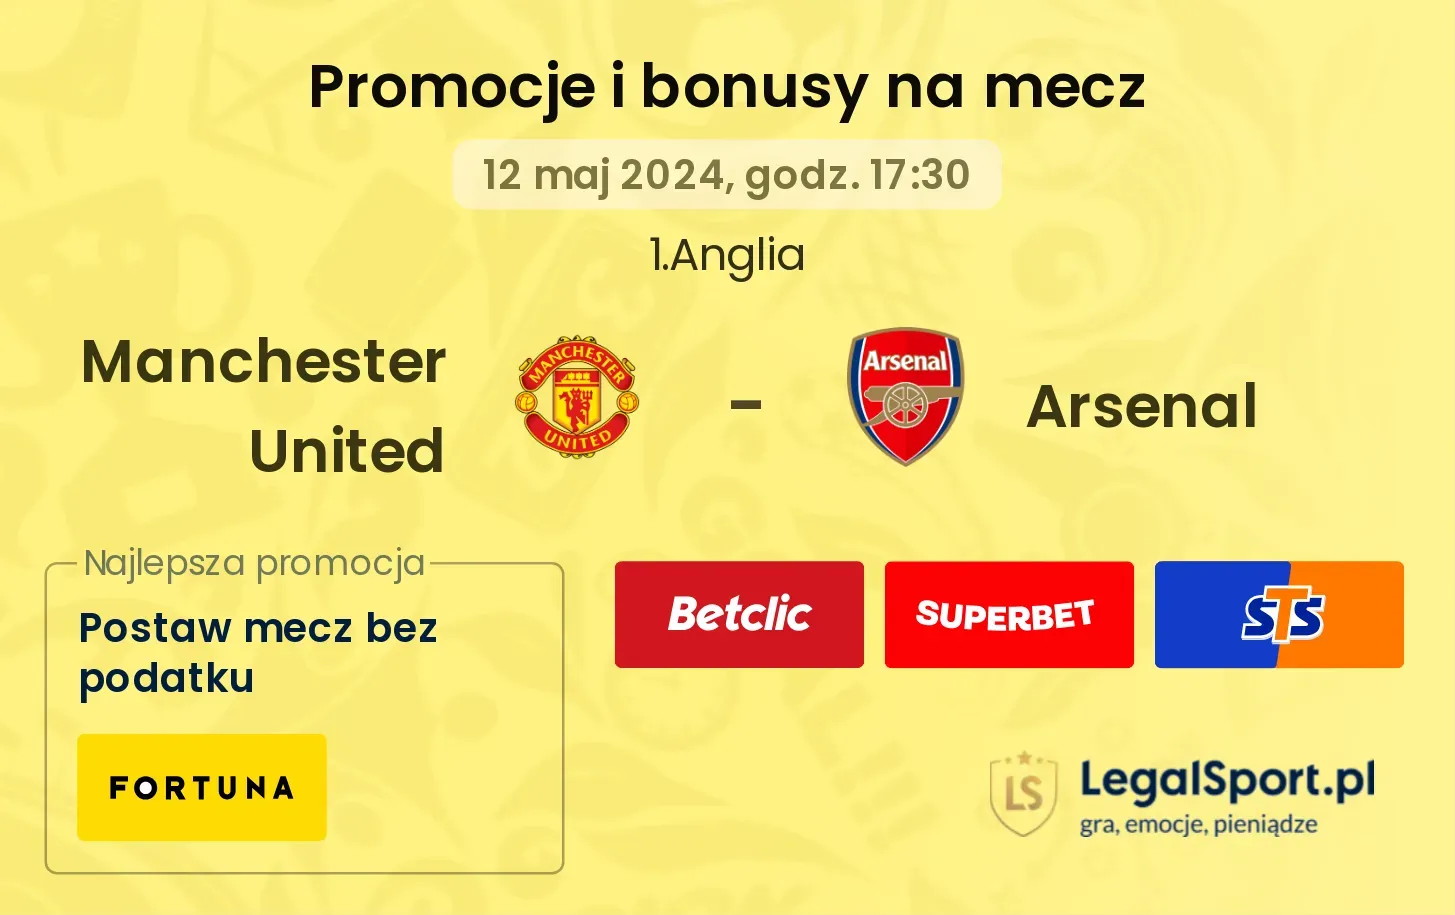 Manchester United - Arsenal bonusy i promocje (12.05, 17:30)